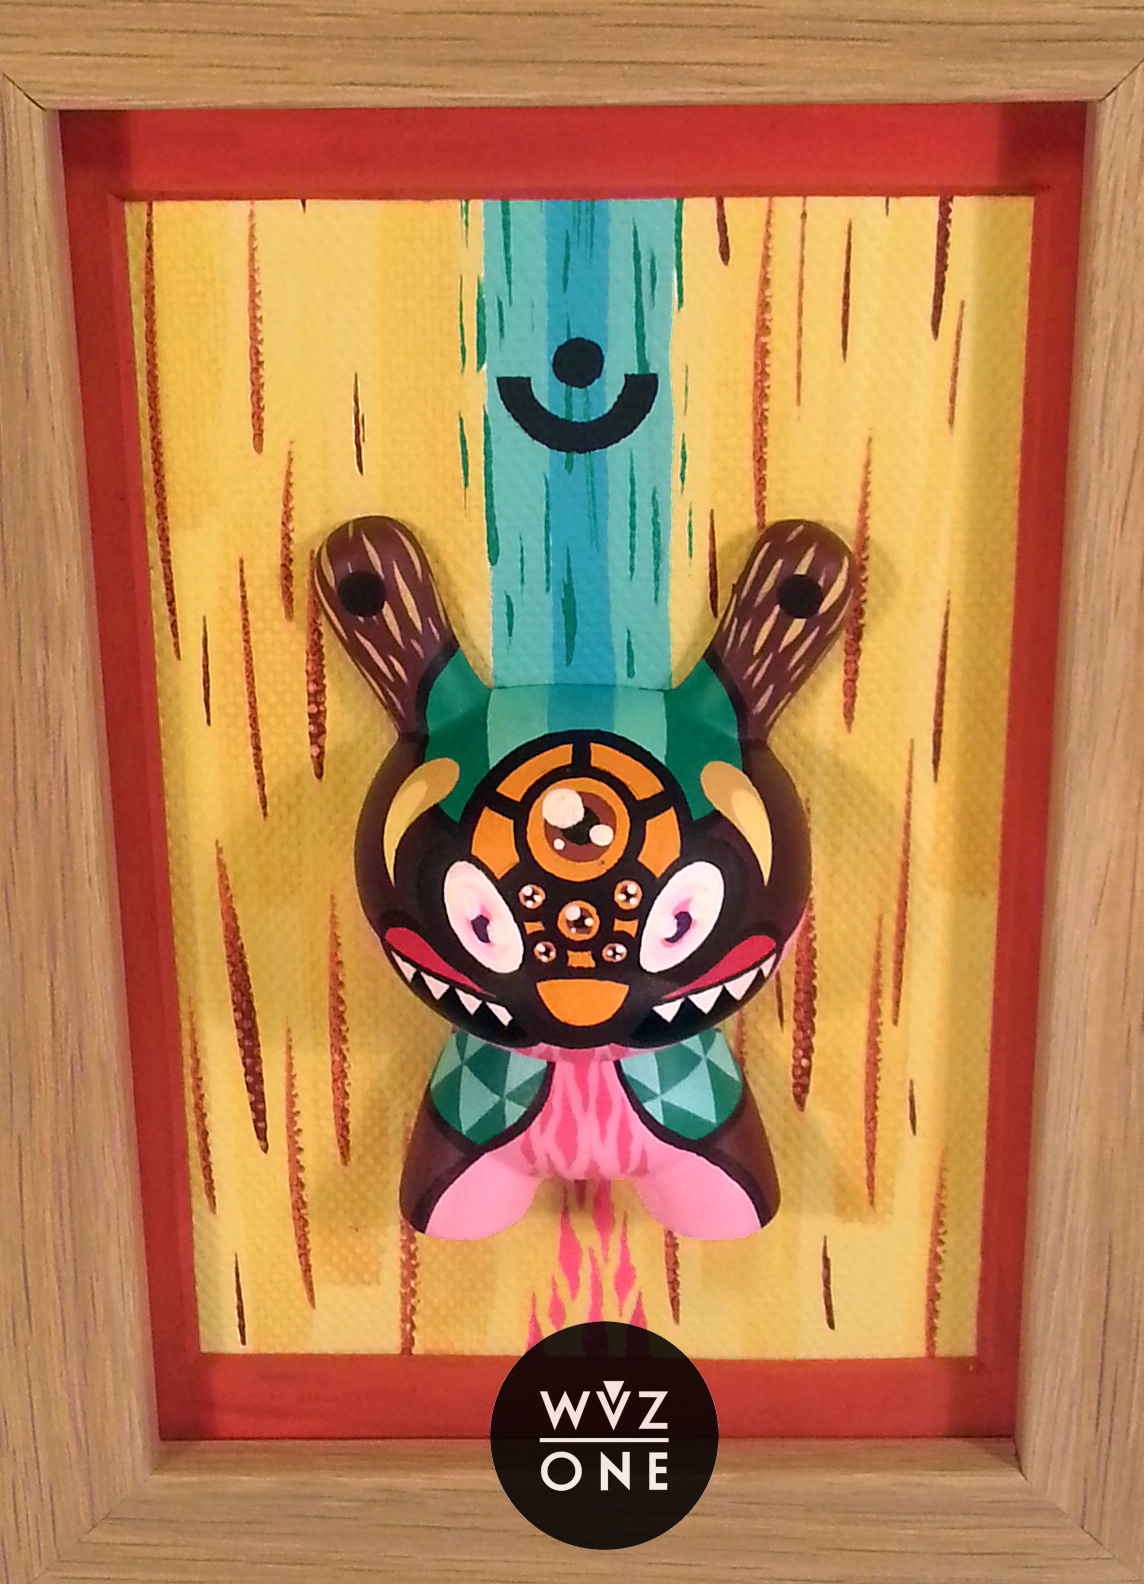 Wuzone Custom Dunny Kidrobot handmade paint commission Munny artoy toy vinyl babàkua design